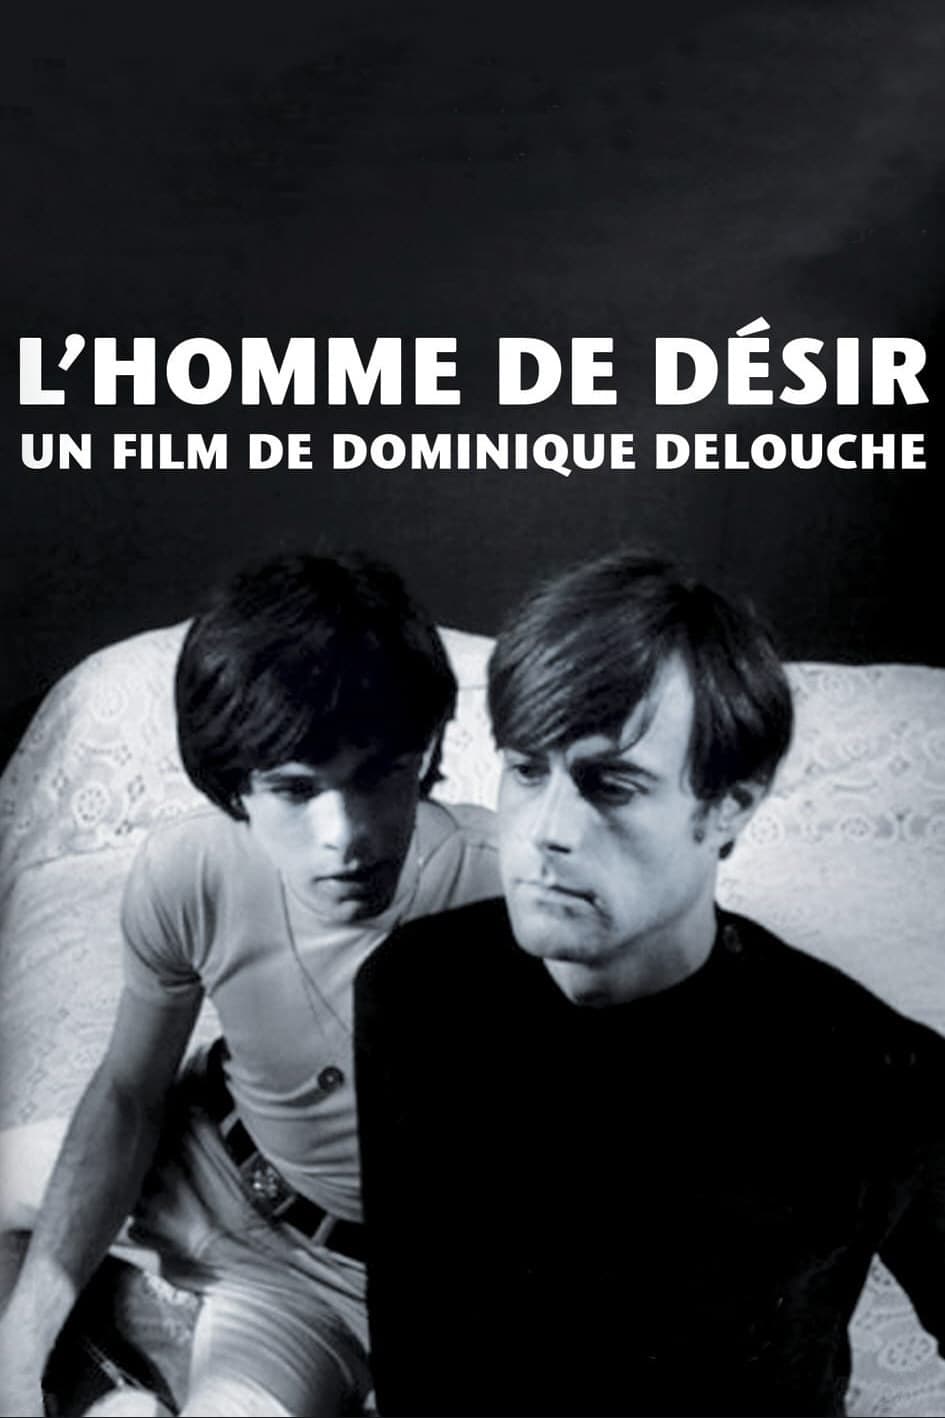 Man of Desire (1971)